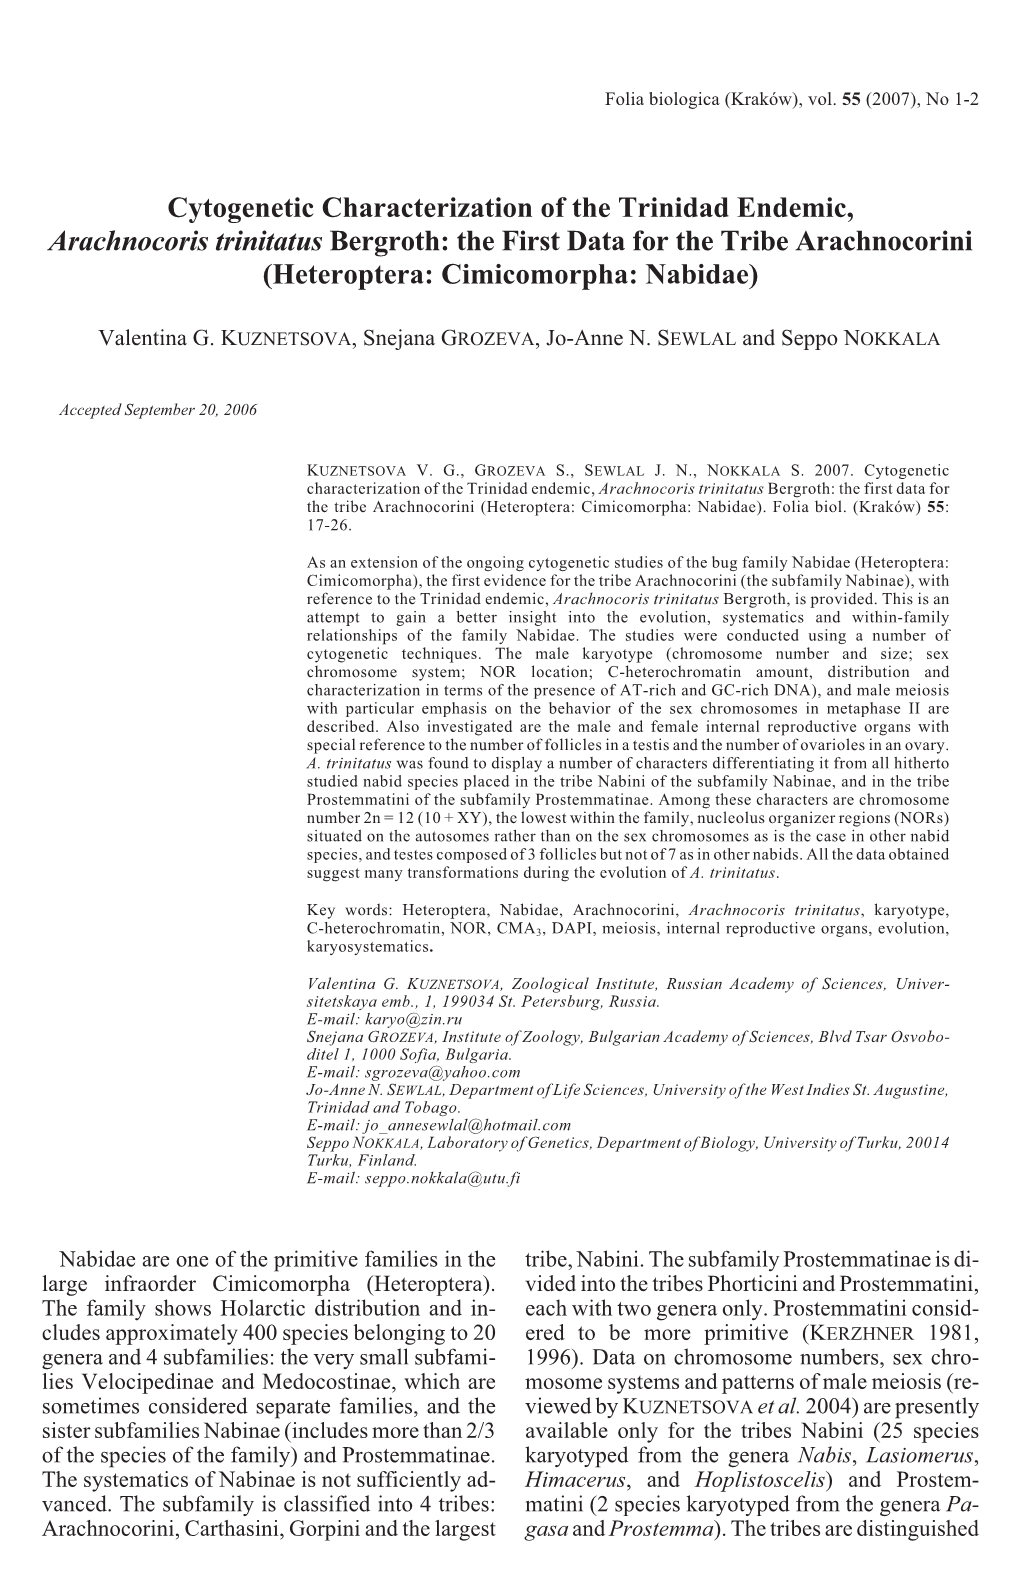 Cytogenetic Characterization of the Trinidad Endemic, &lt;I&gt;Arachnocoris